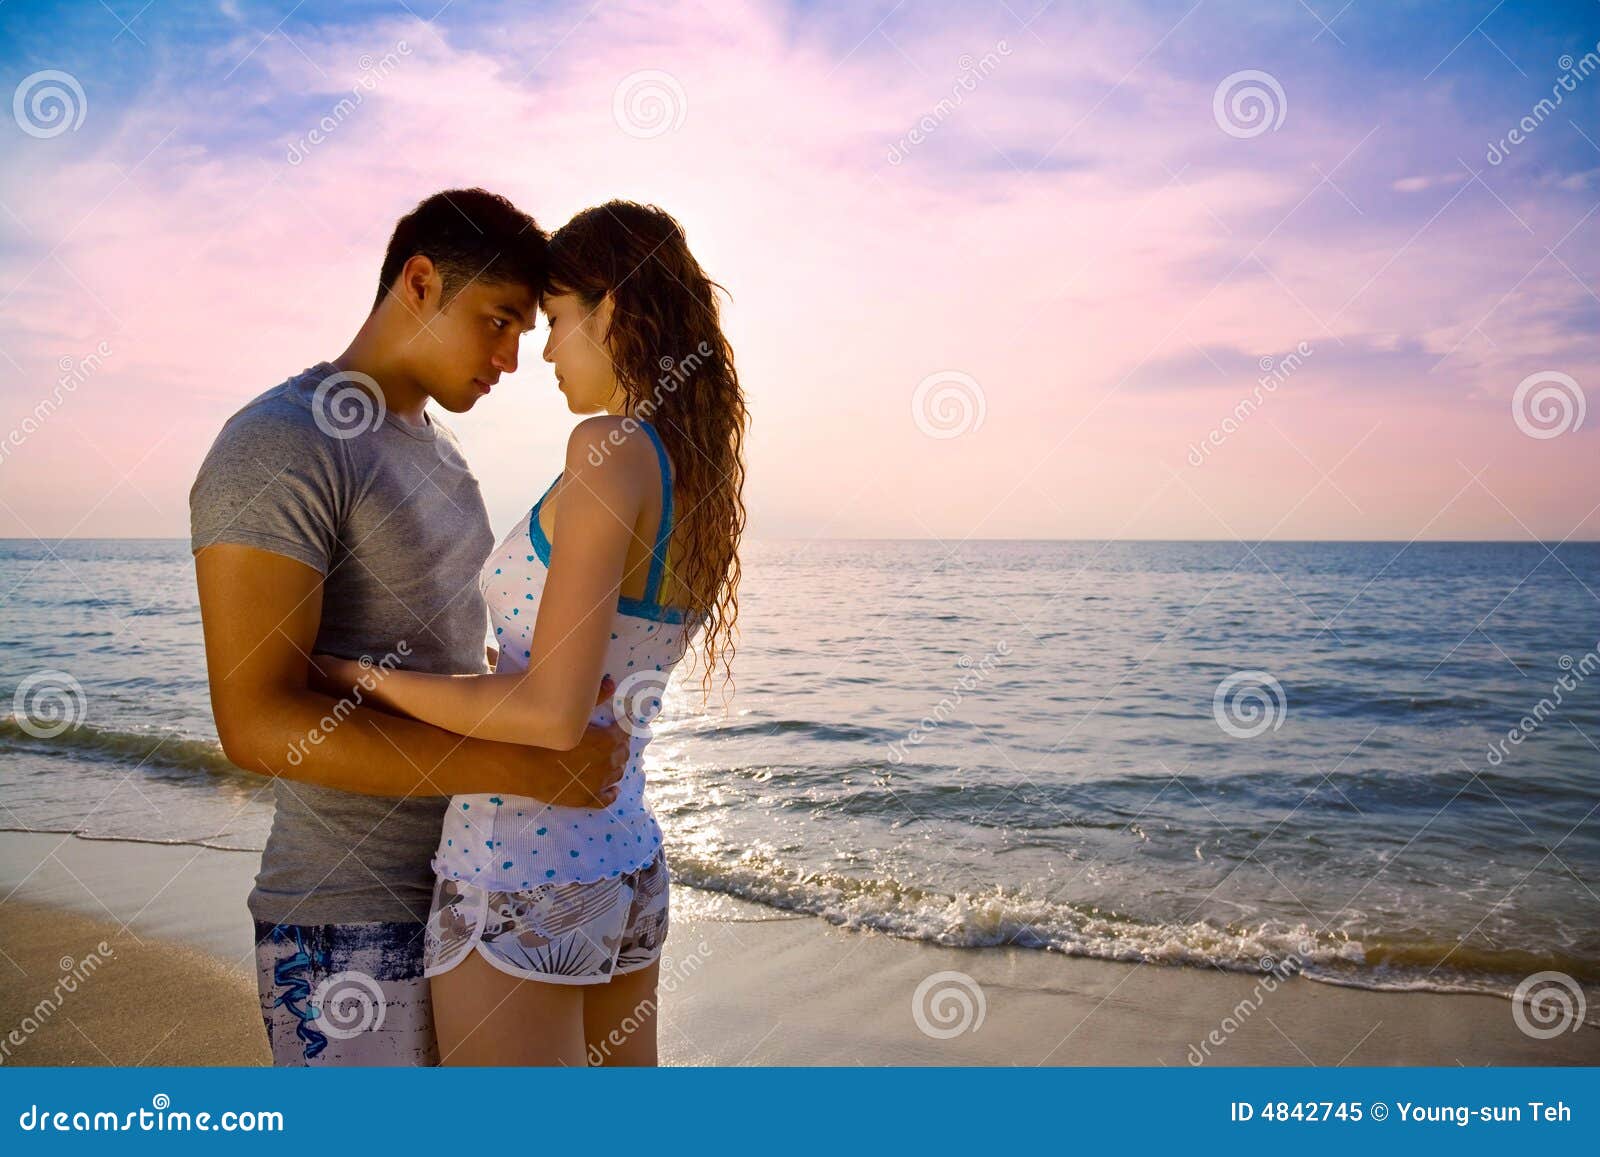 Loving Couple On A Beautiful Sunset Beach Royalty Free